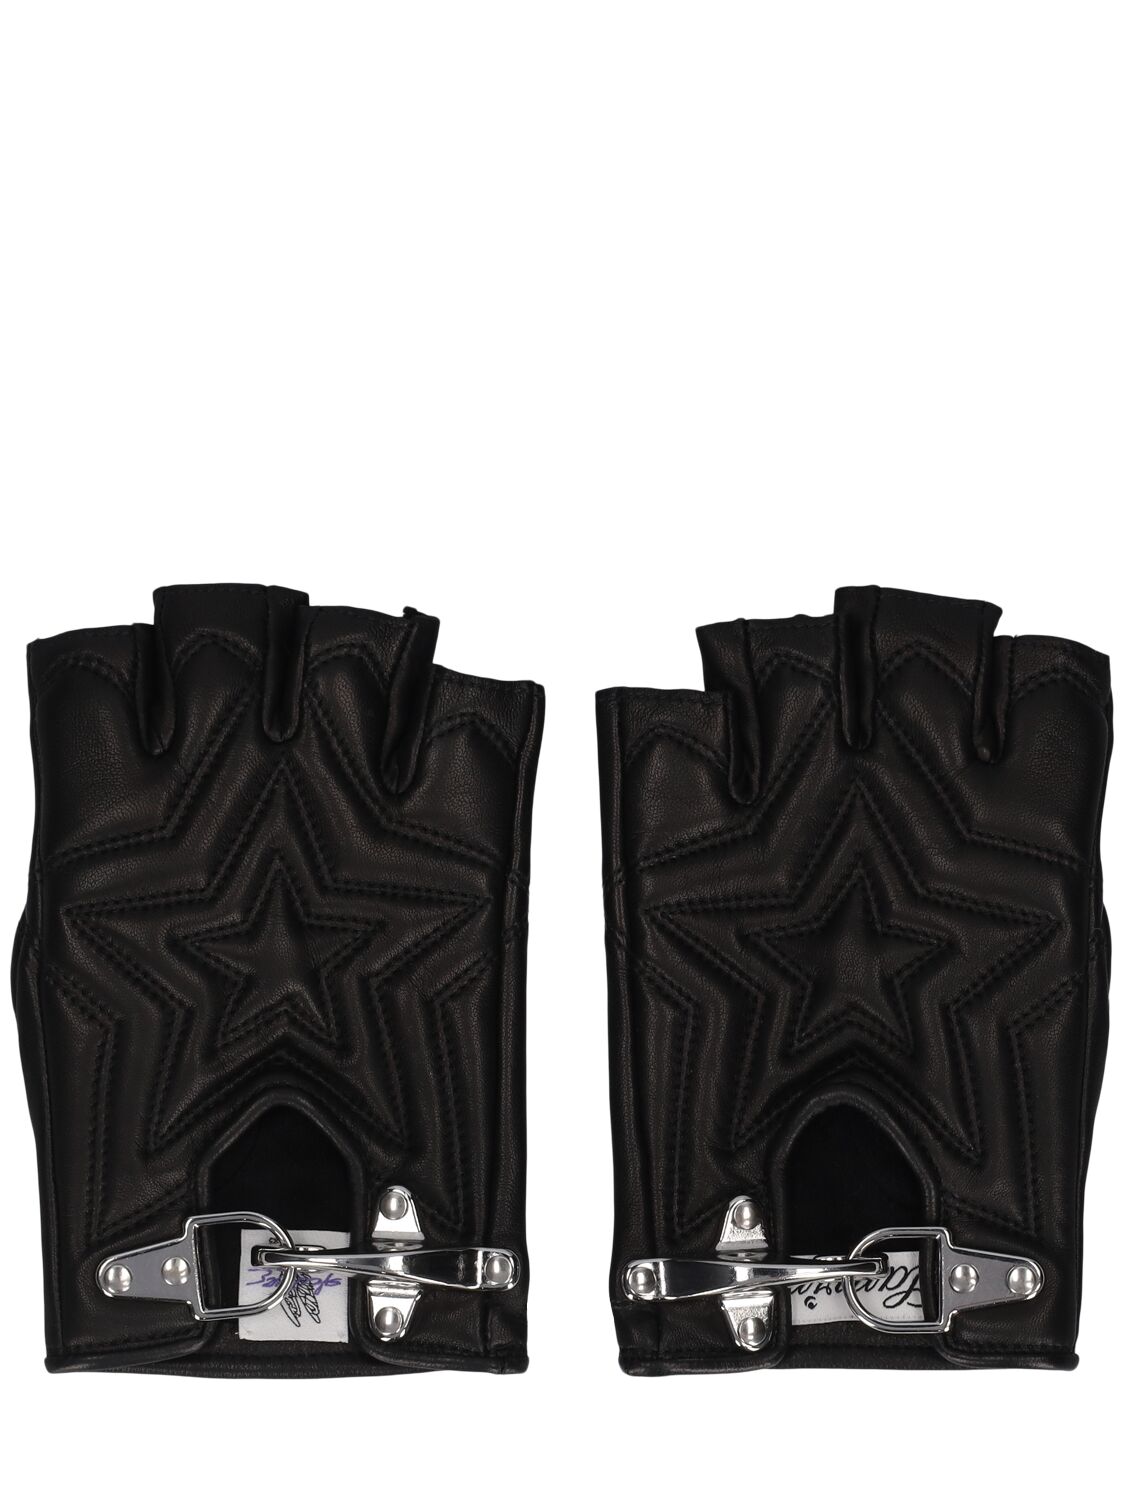 Image of Padded Leather Fingerless Gloves